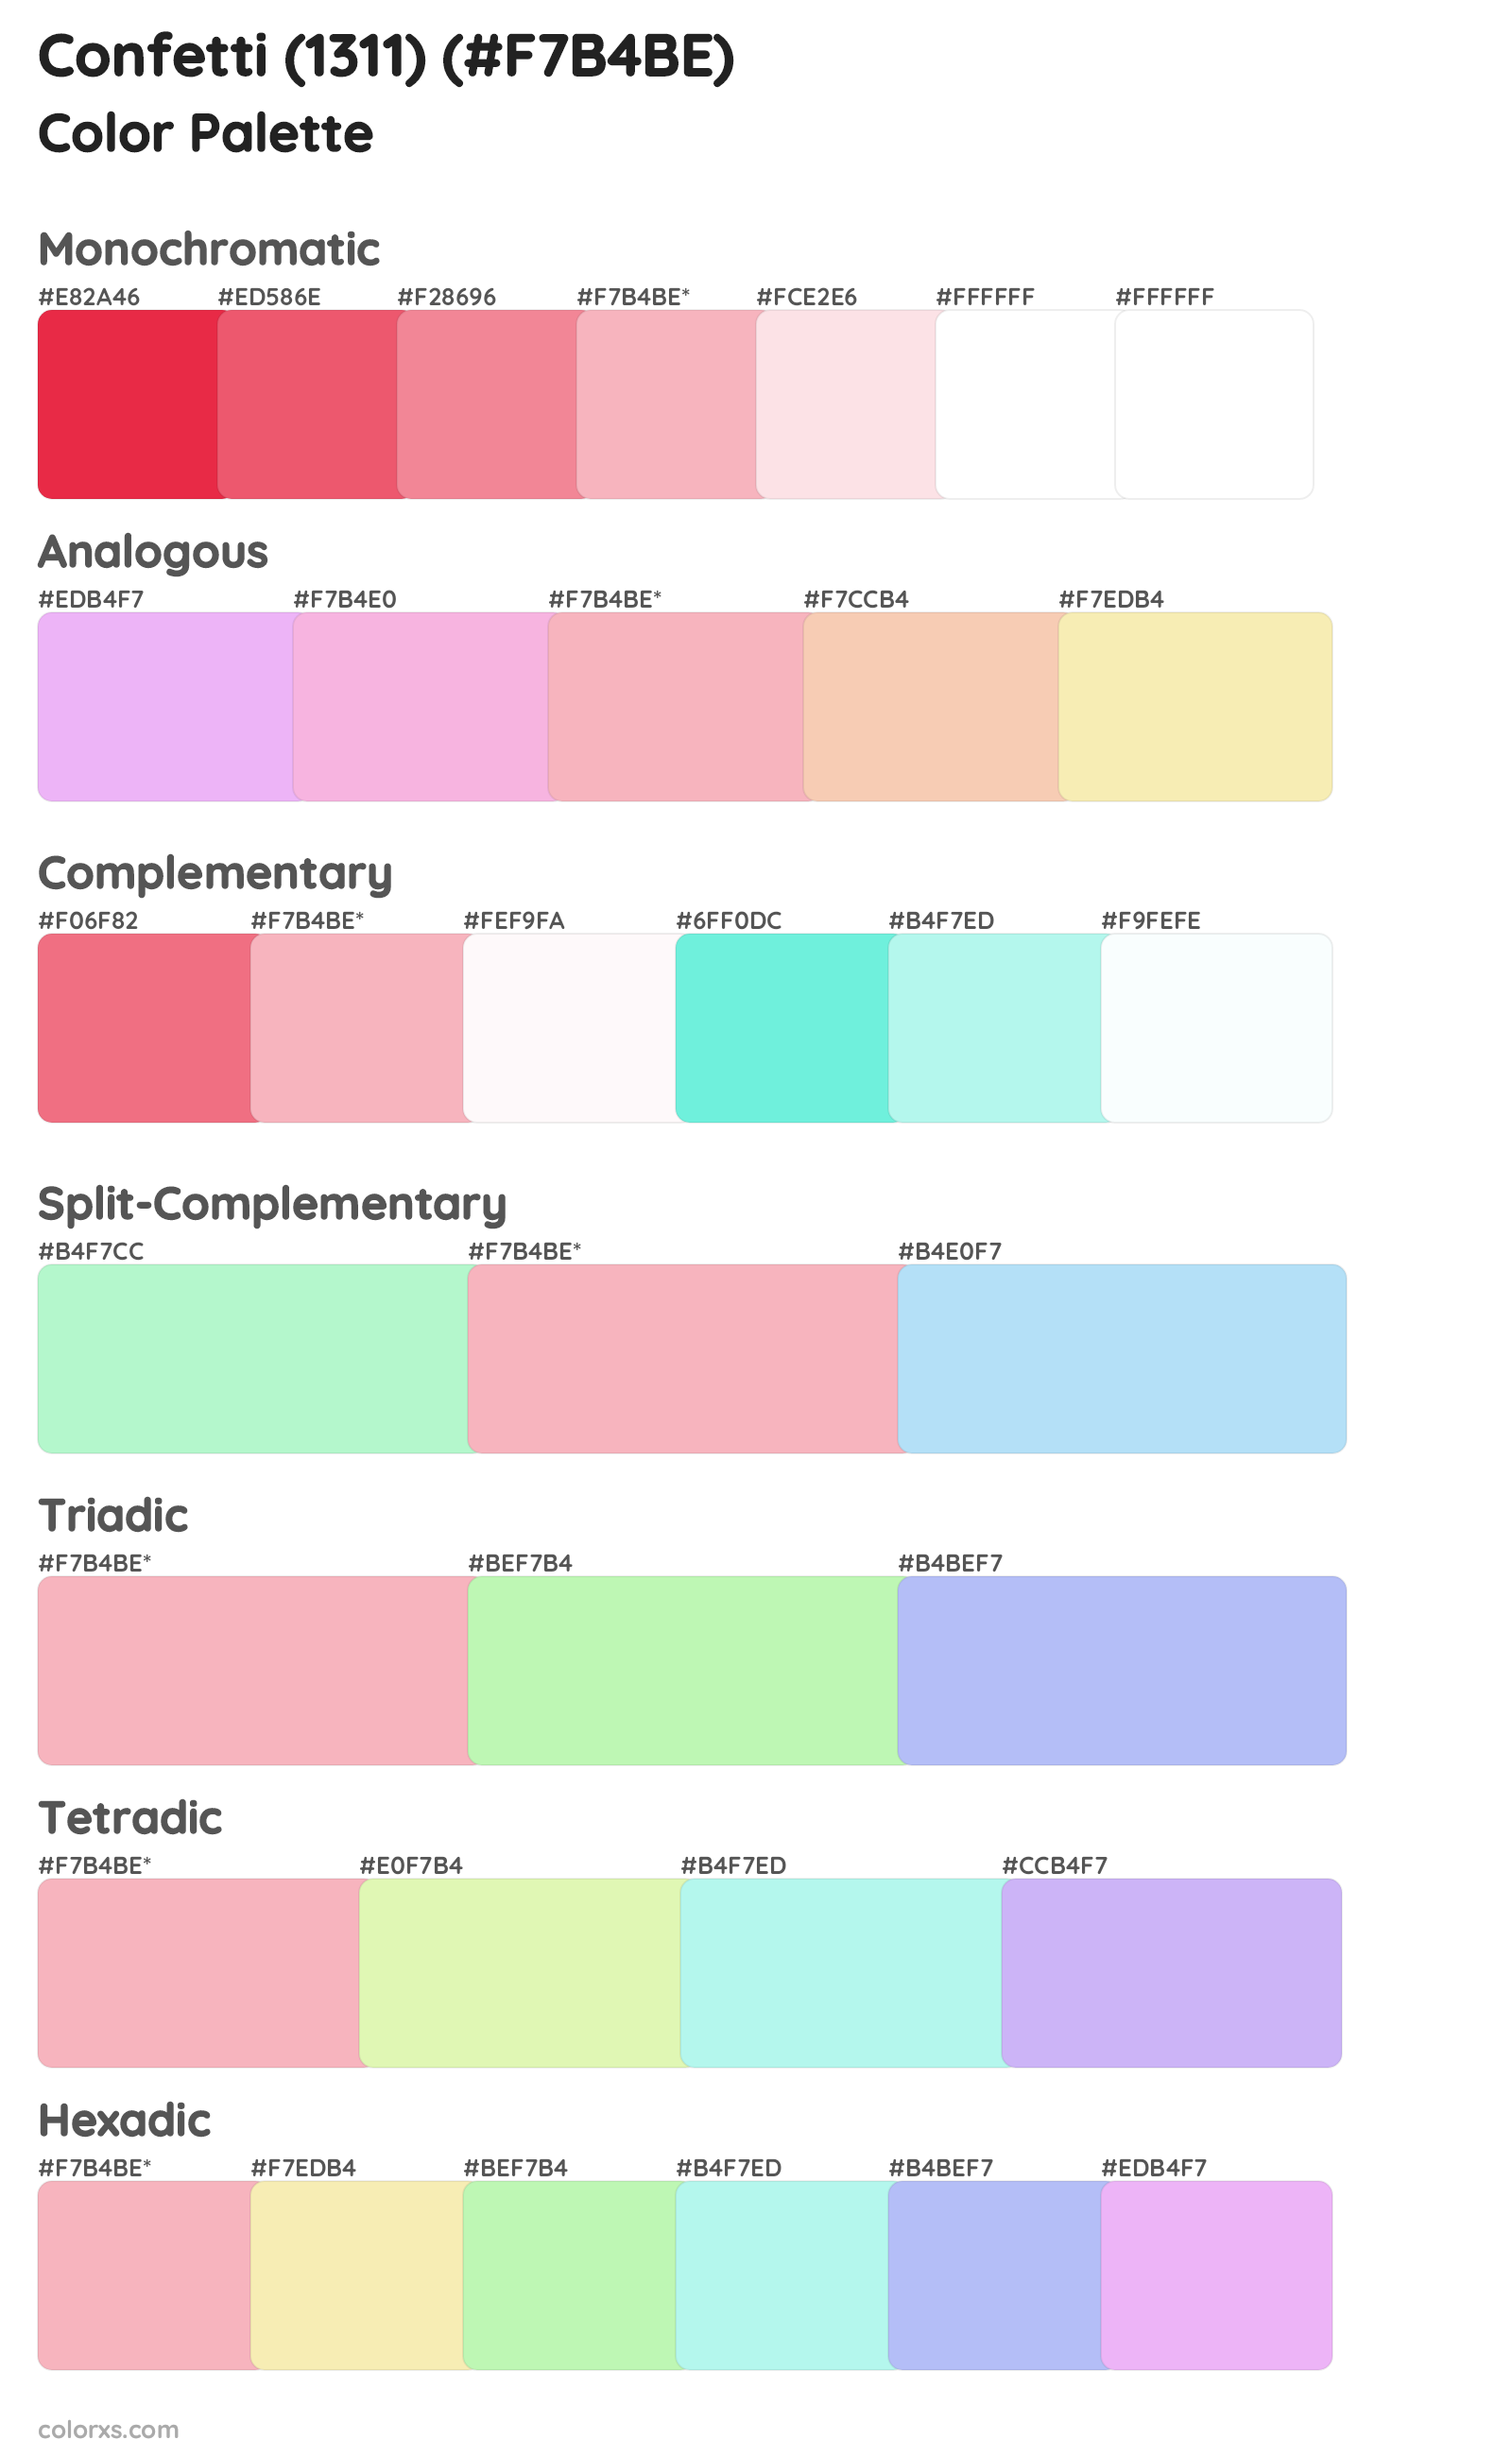 Confetti (1311) Color Scheme Palettes